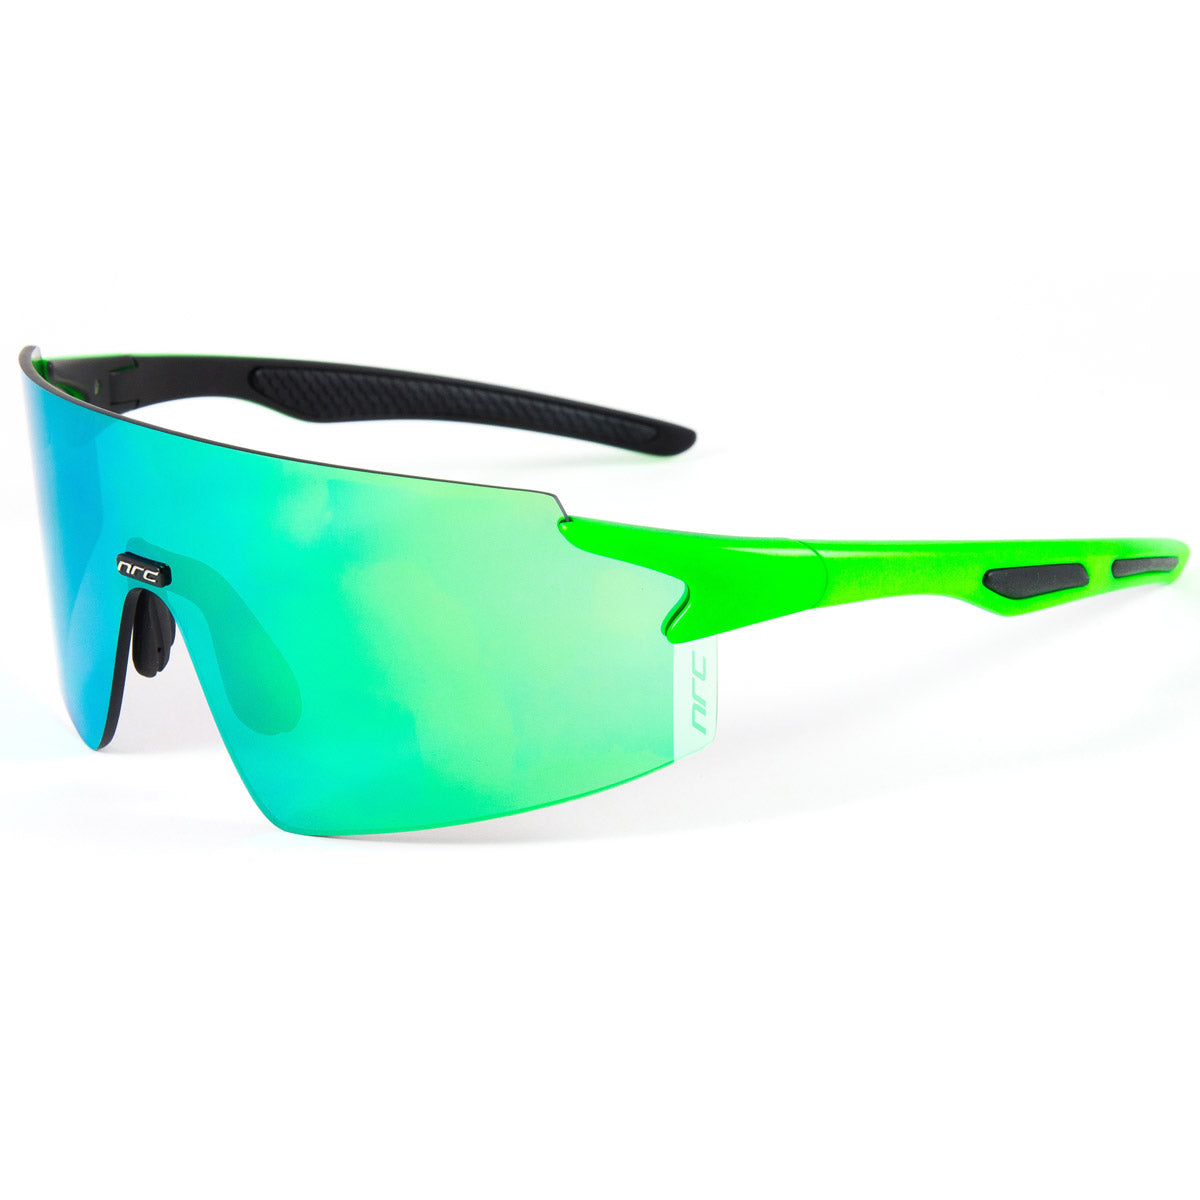 NRC P-ride Marathon sunglasses - Green | All4cycling